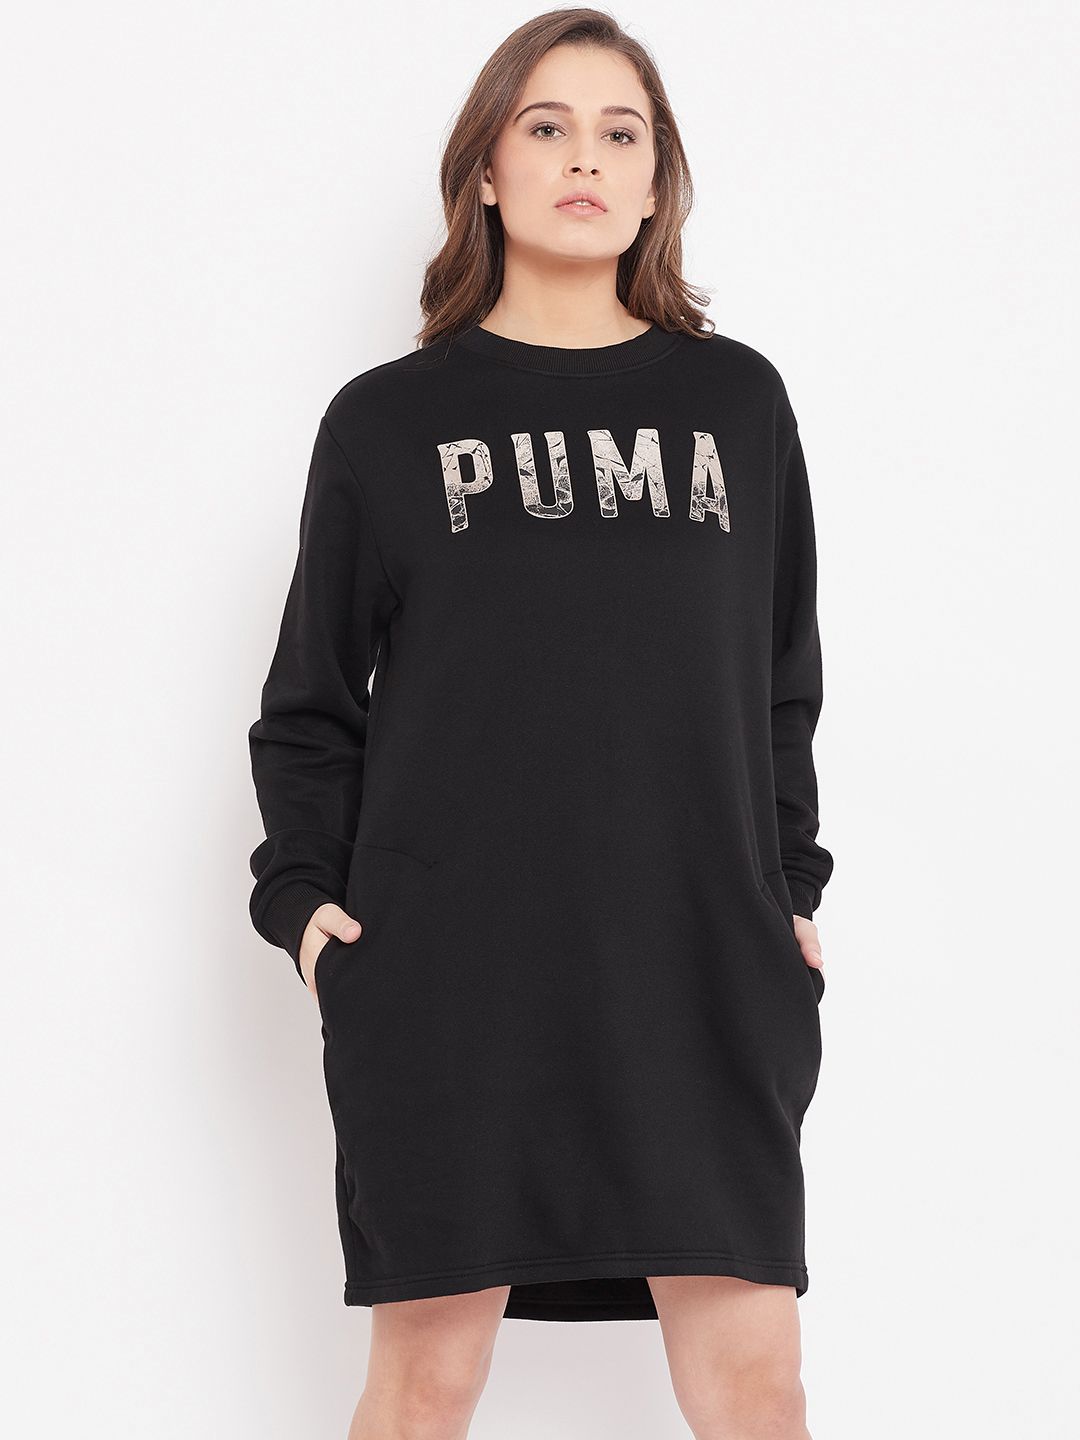 puma women clothing